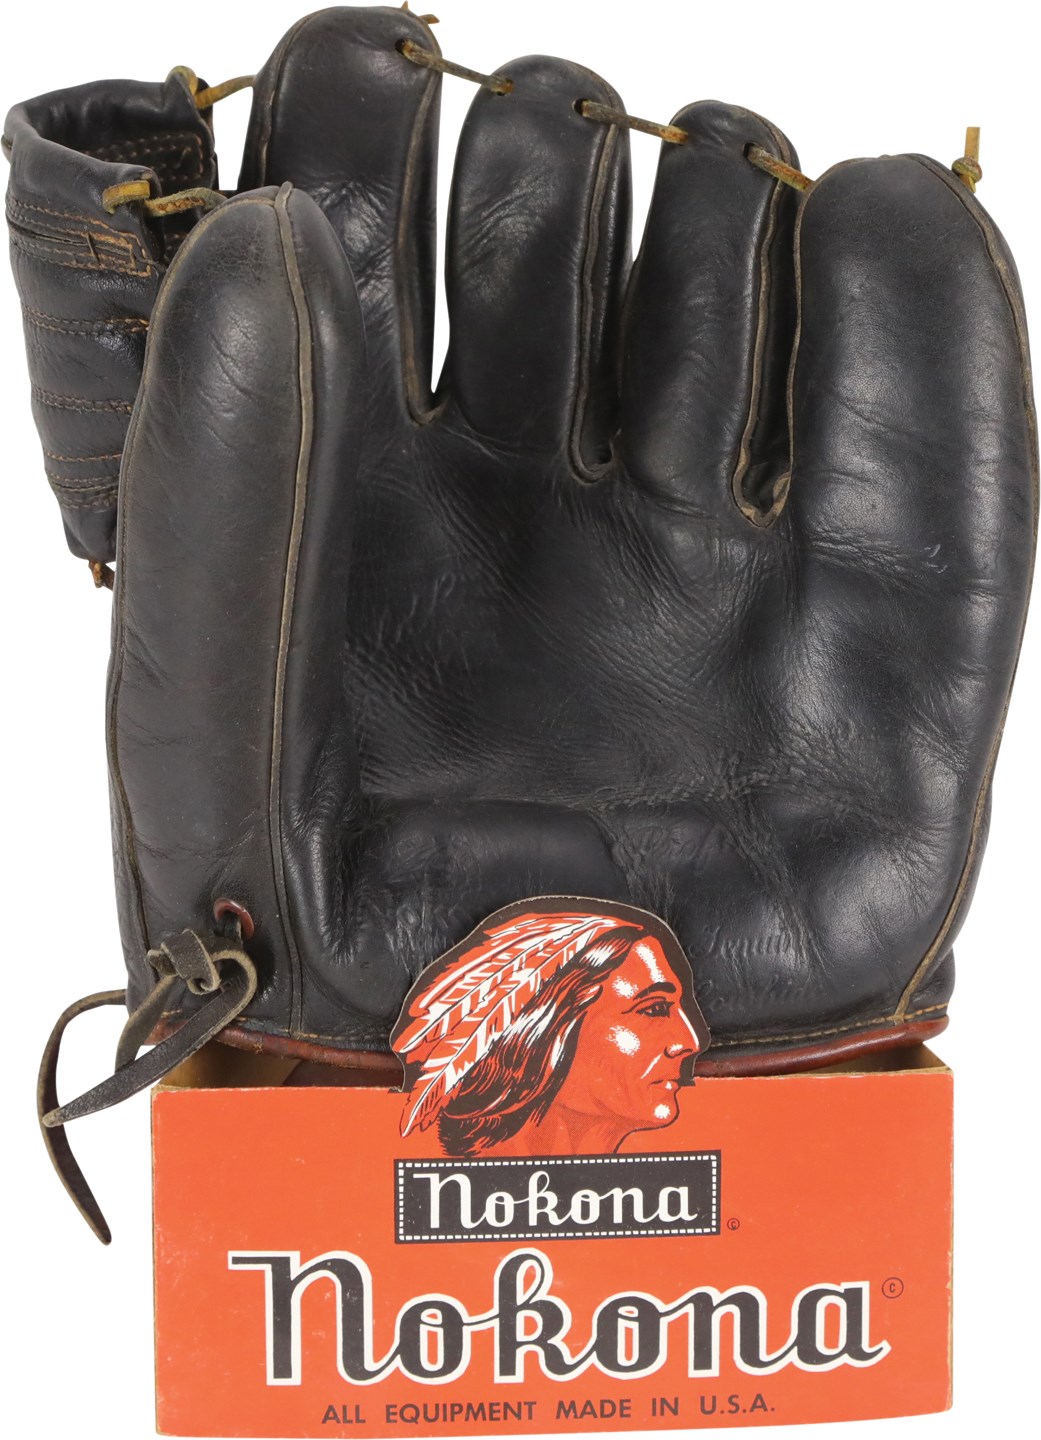 Rare 1940s Nokona Black Leather Professional Model Glove w/Store Display Stand